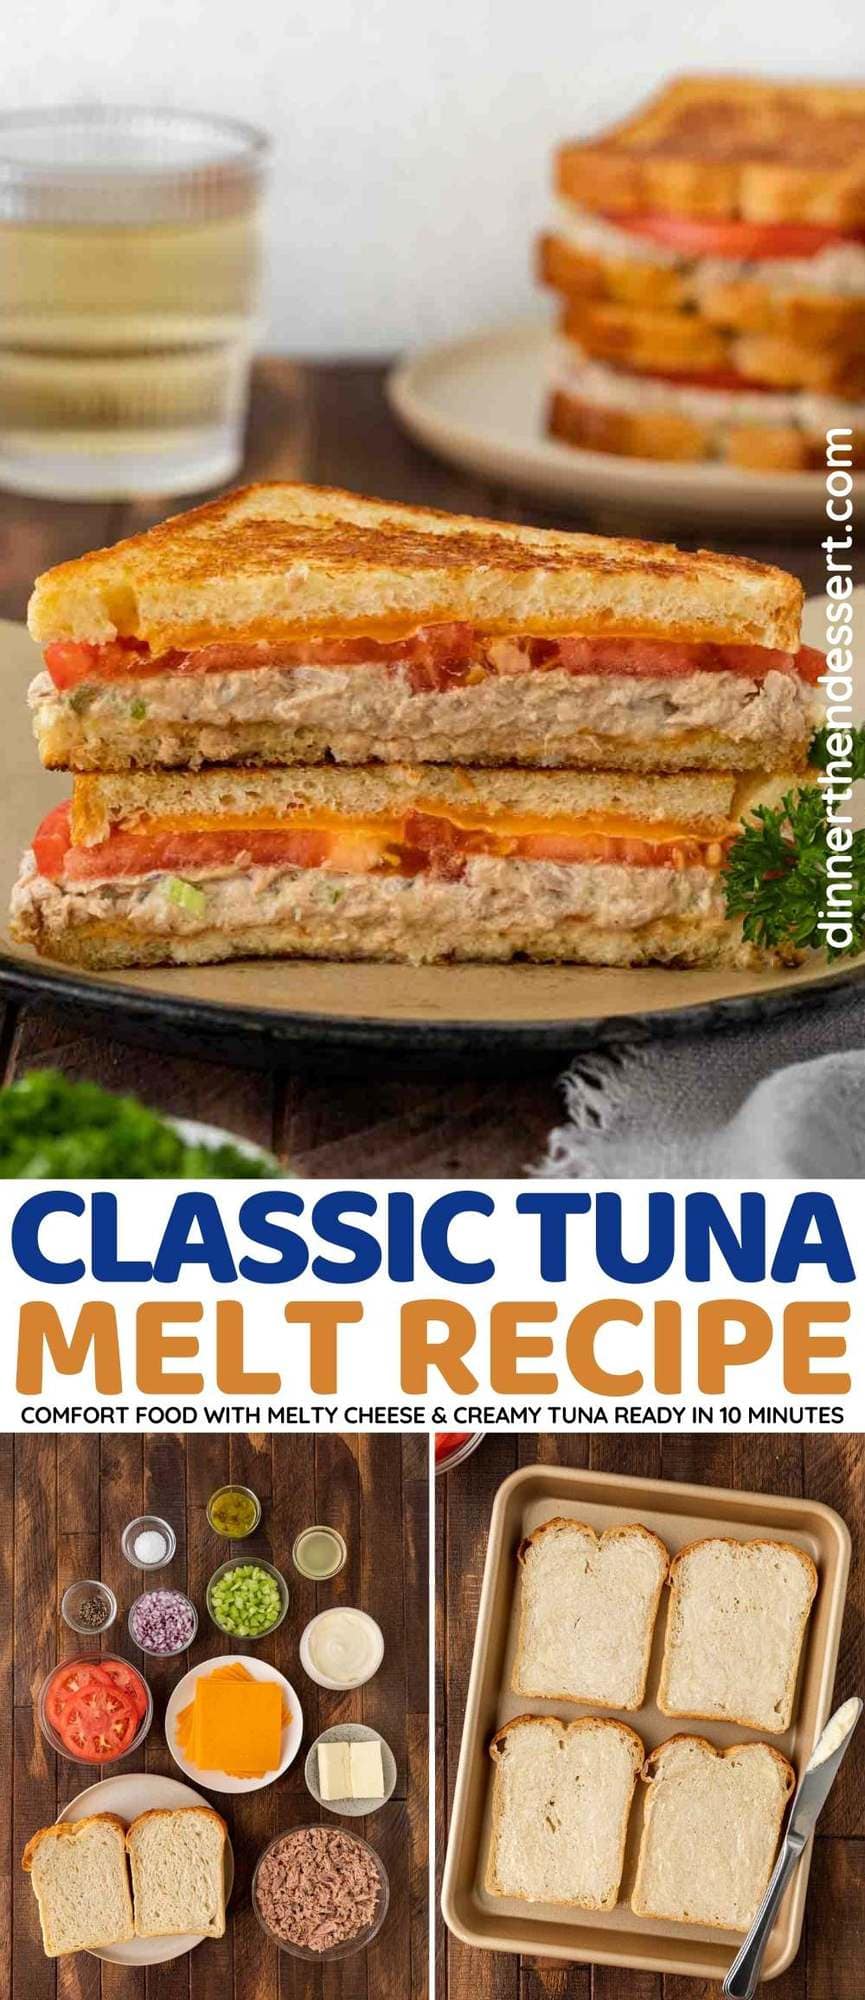 Classic Tuna Melt collage